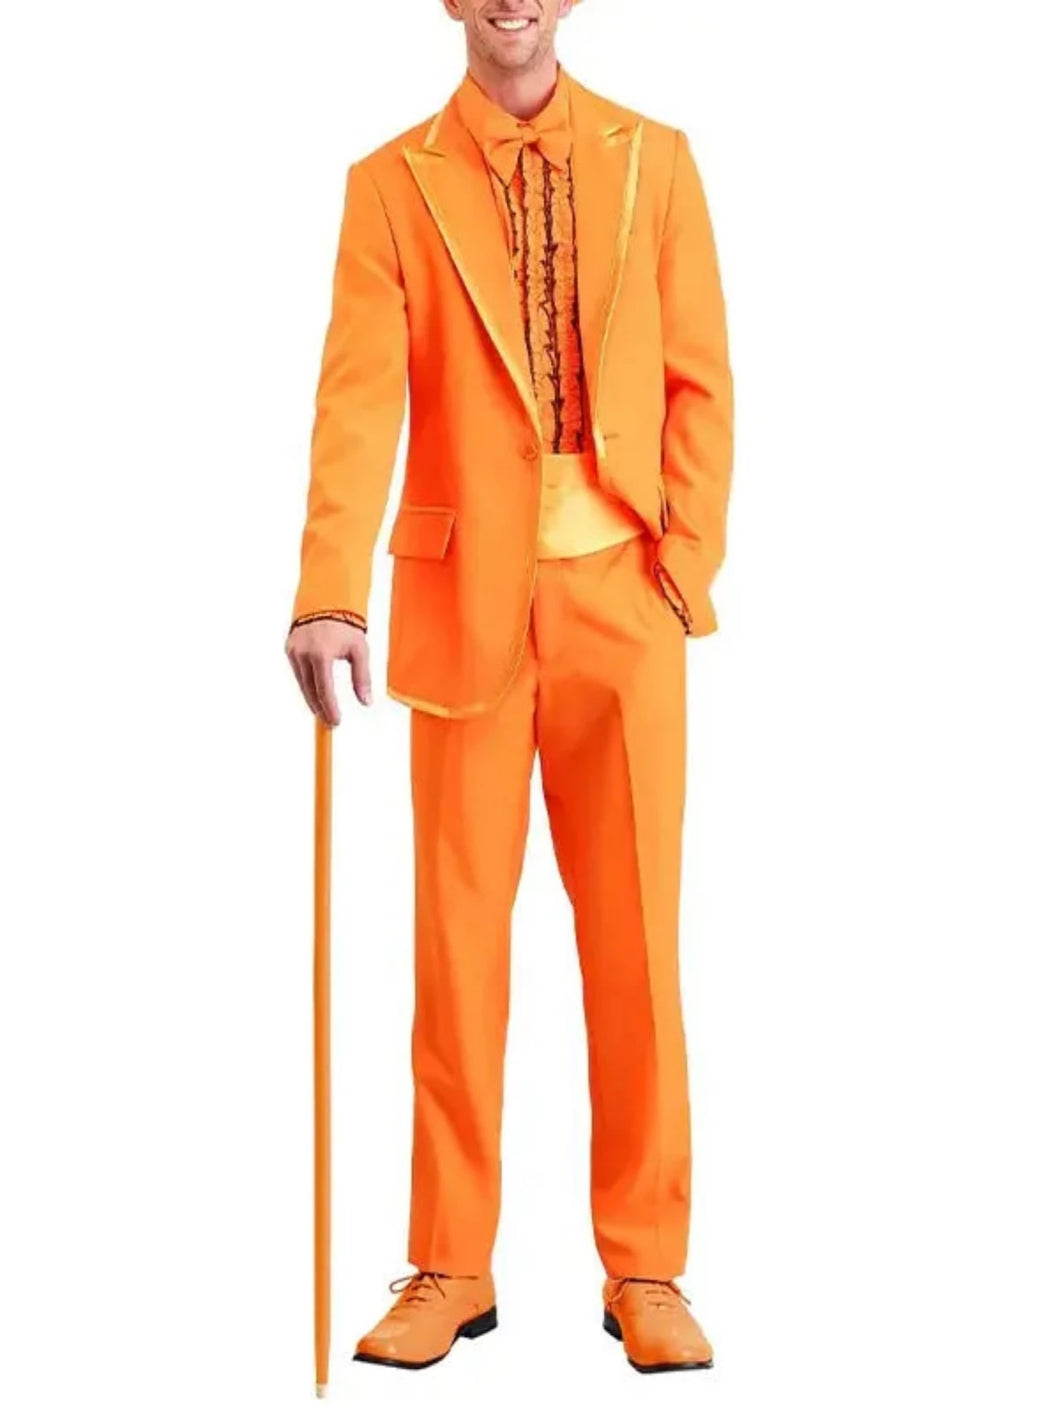 Halloween Orange Tuxedo Suit